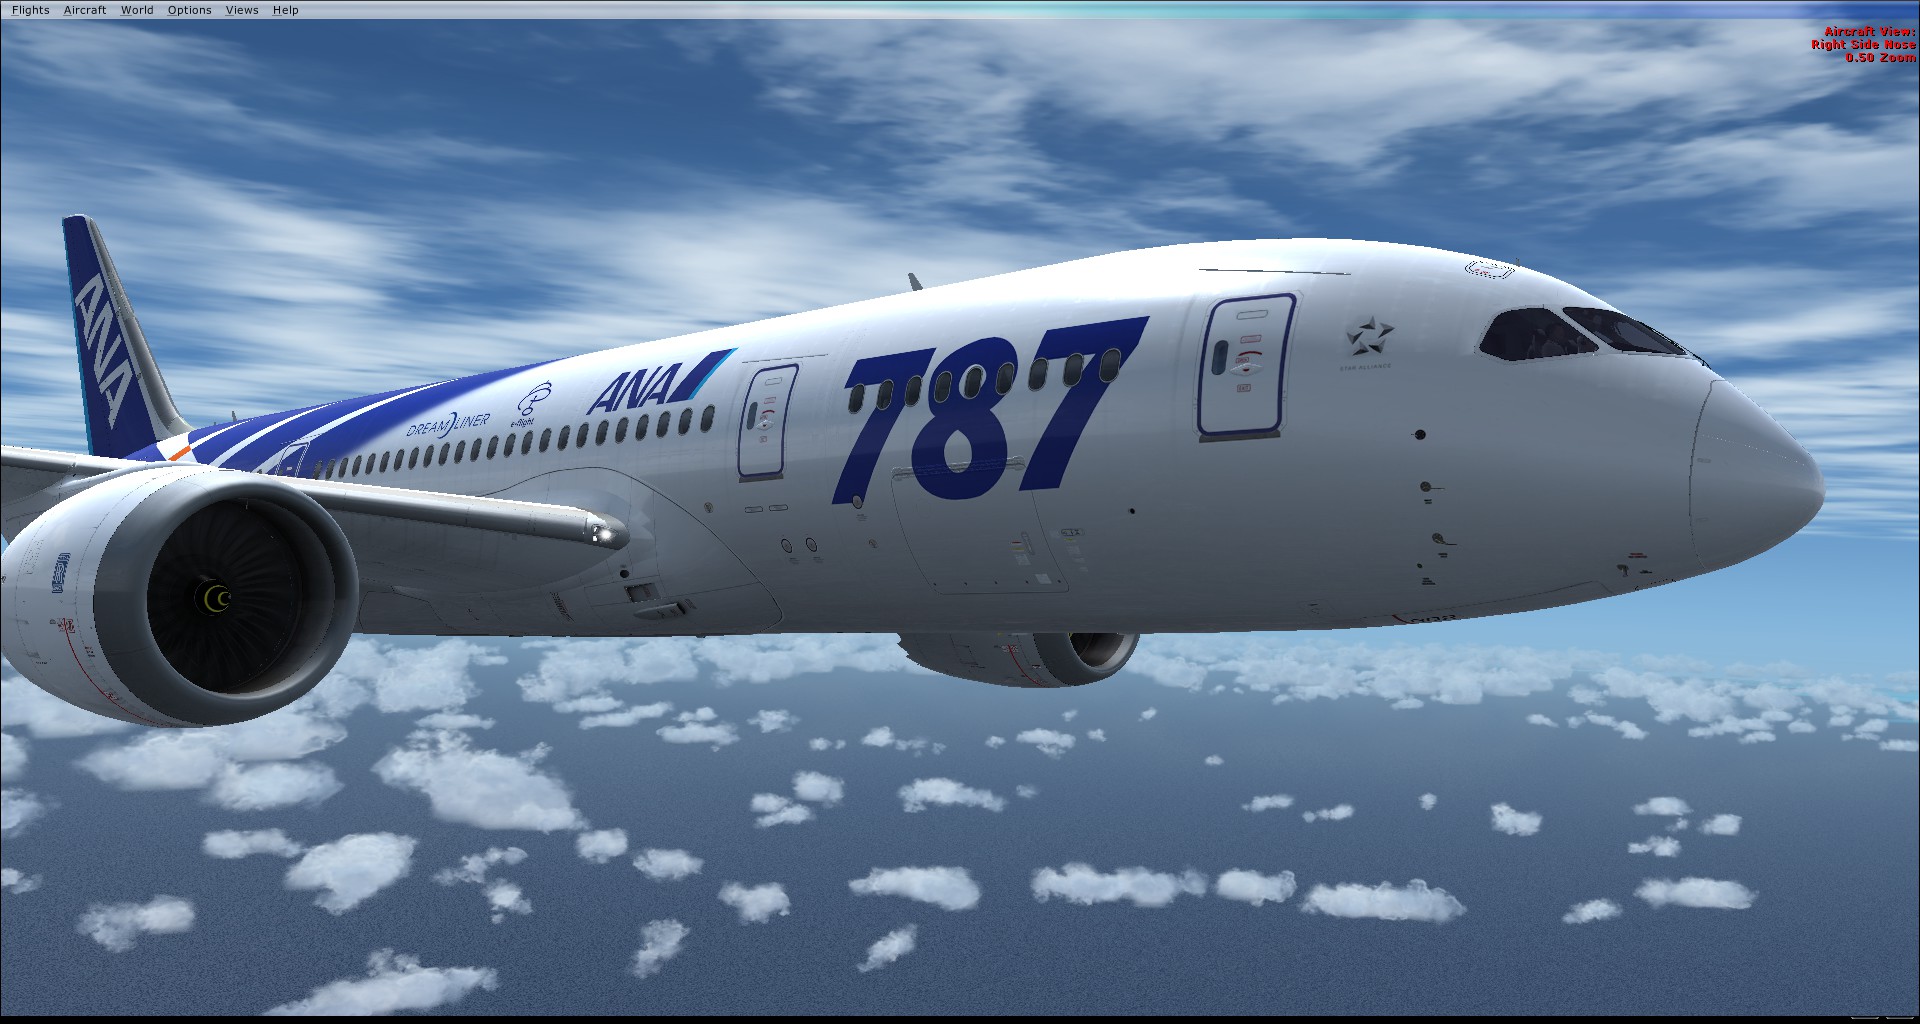 Quality Wings 787 ANA鯖-9853 